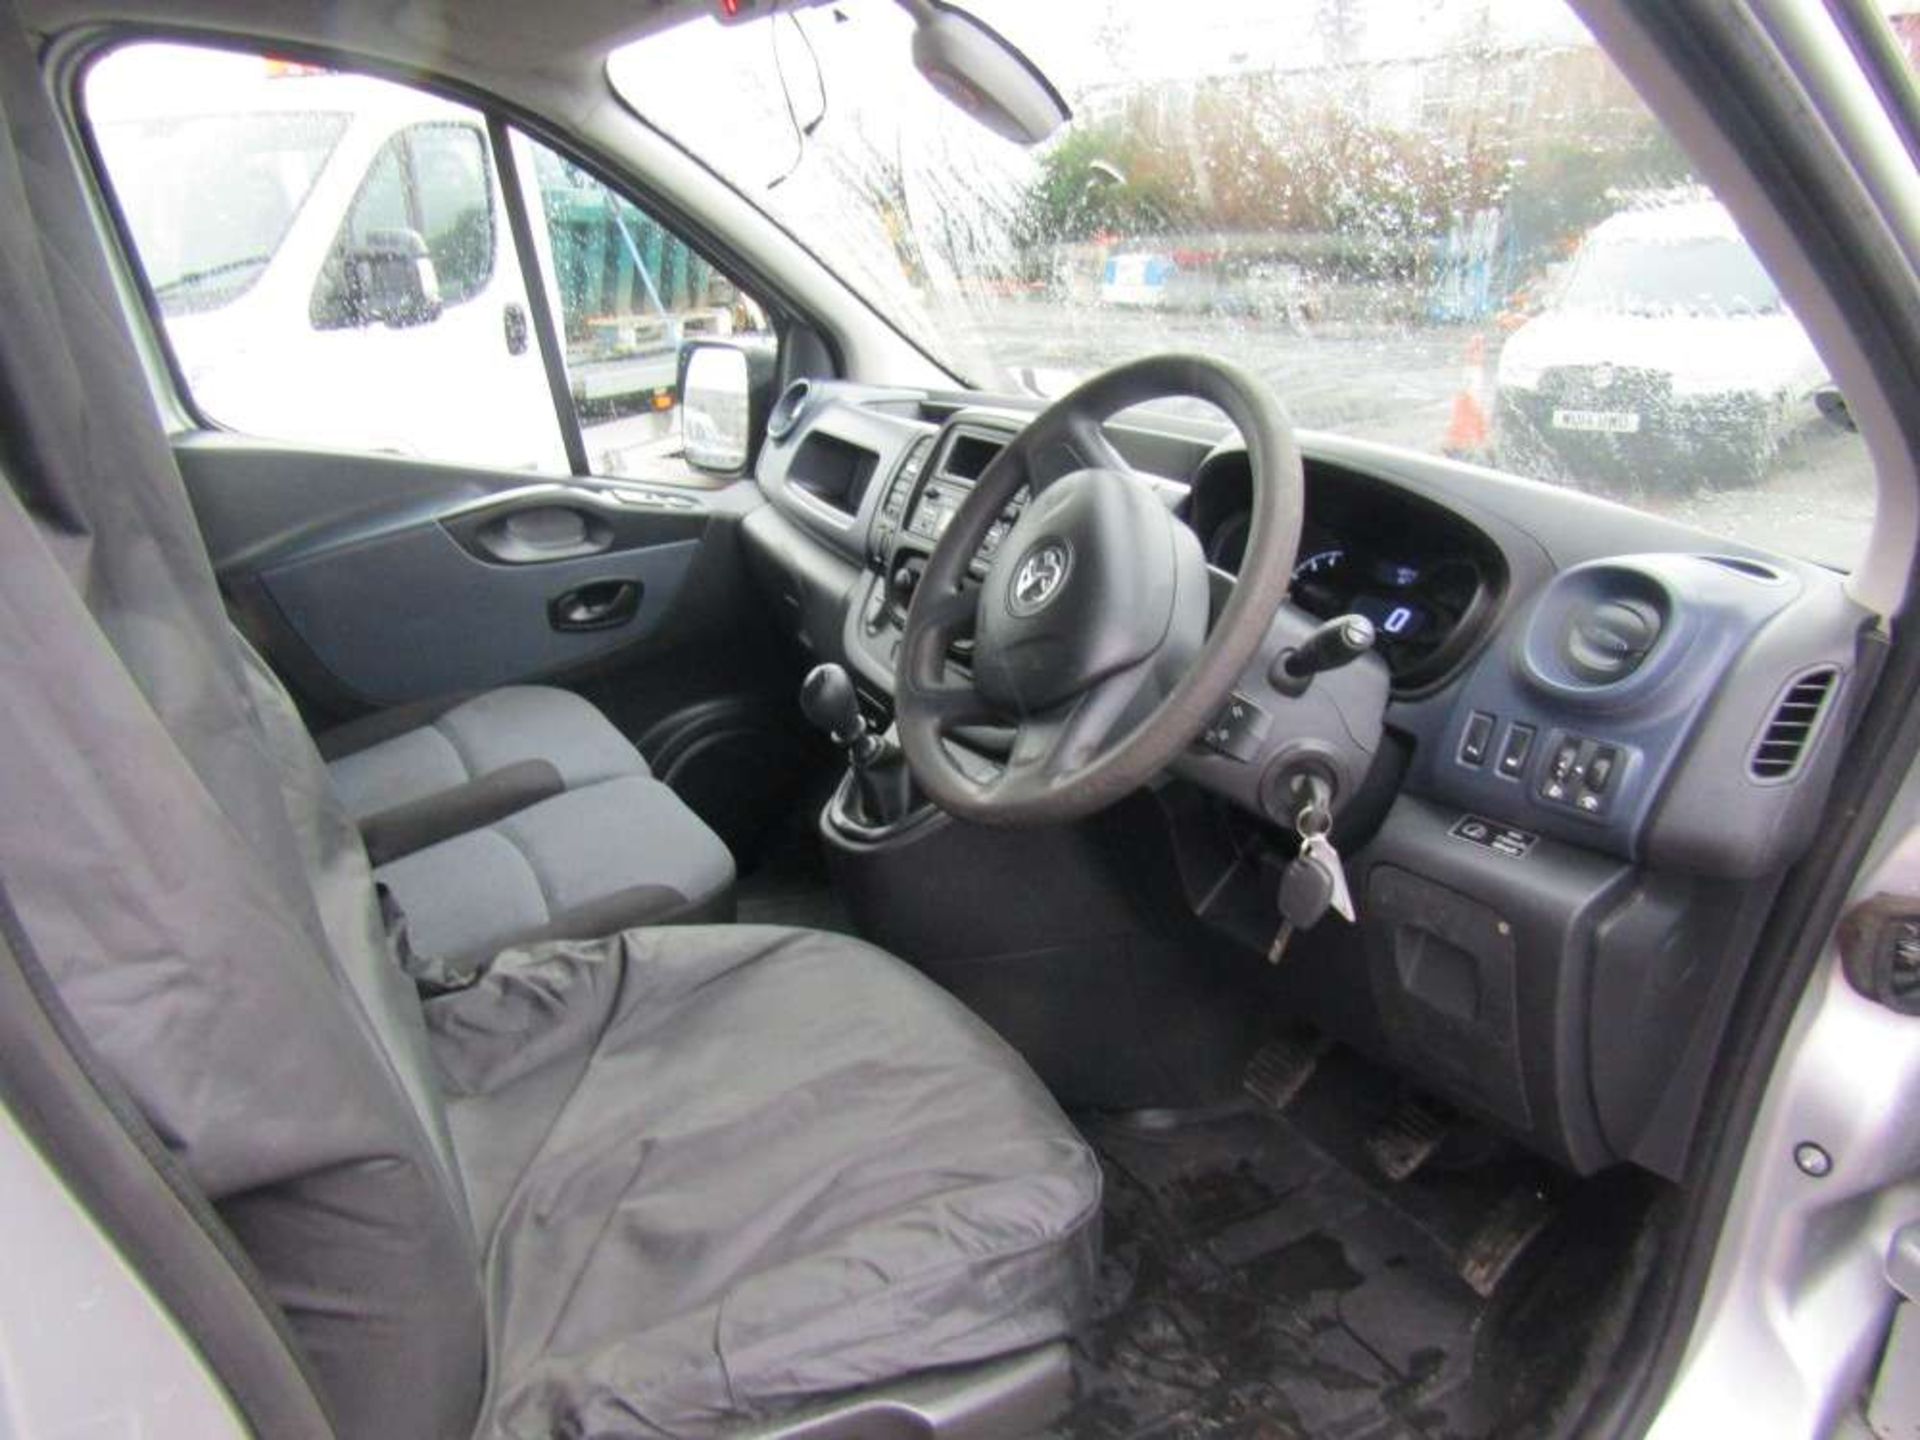 2015 64 reg Vauxhall Vivaro 2900 CDTI Ecoflex - Image 6 of 6